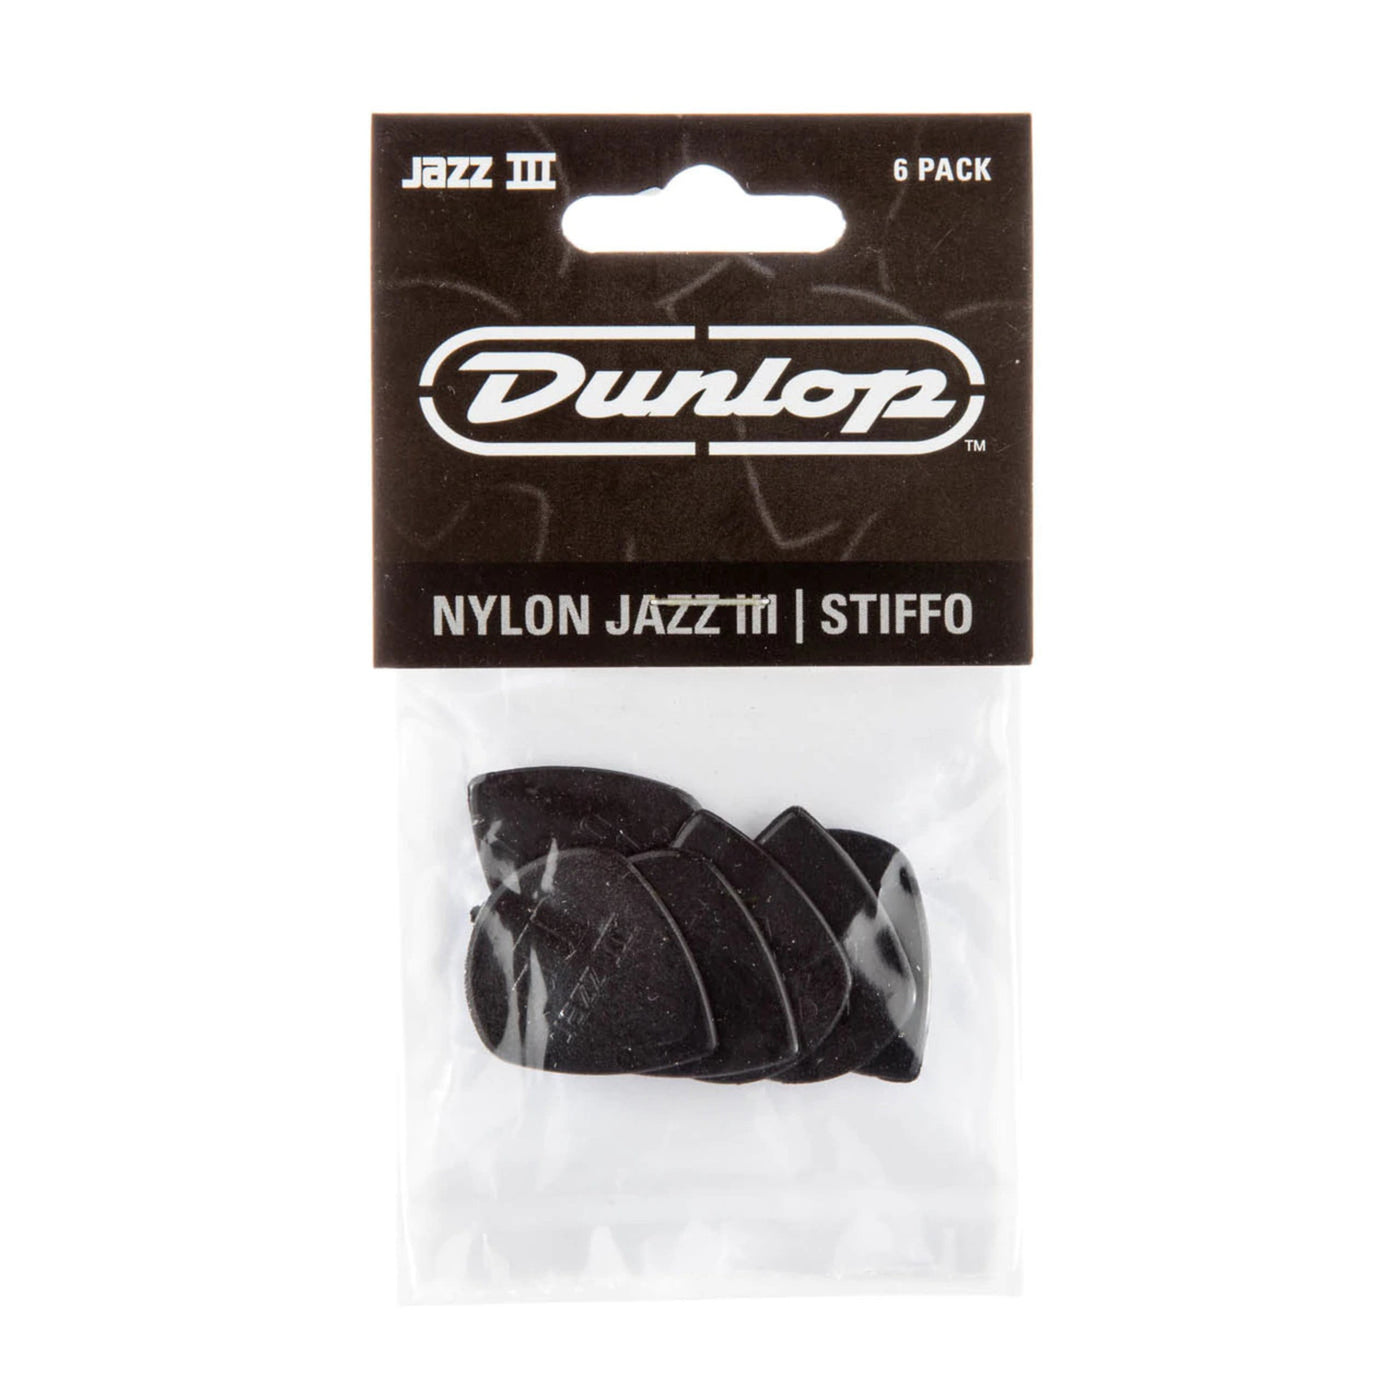 Dunlop 47P3S Nylon Jazz lll Stiffo Pick- 6 Pack